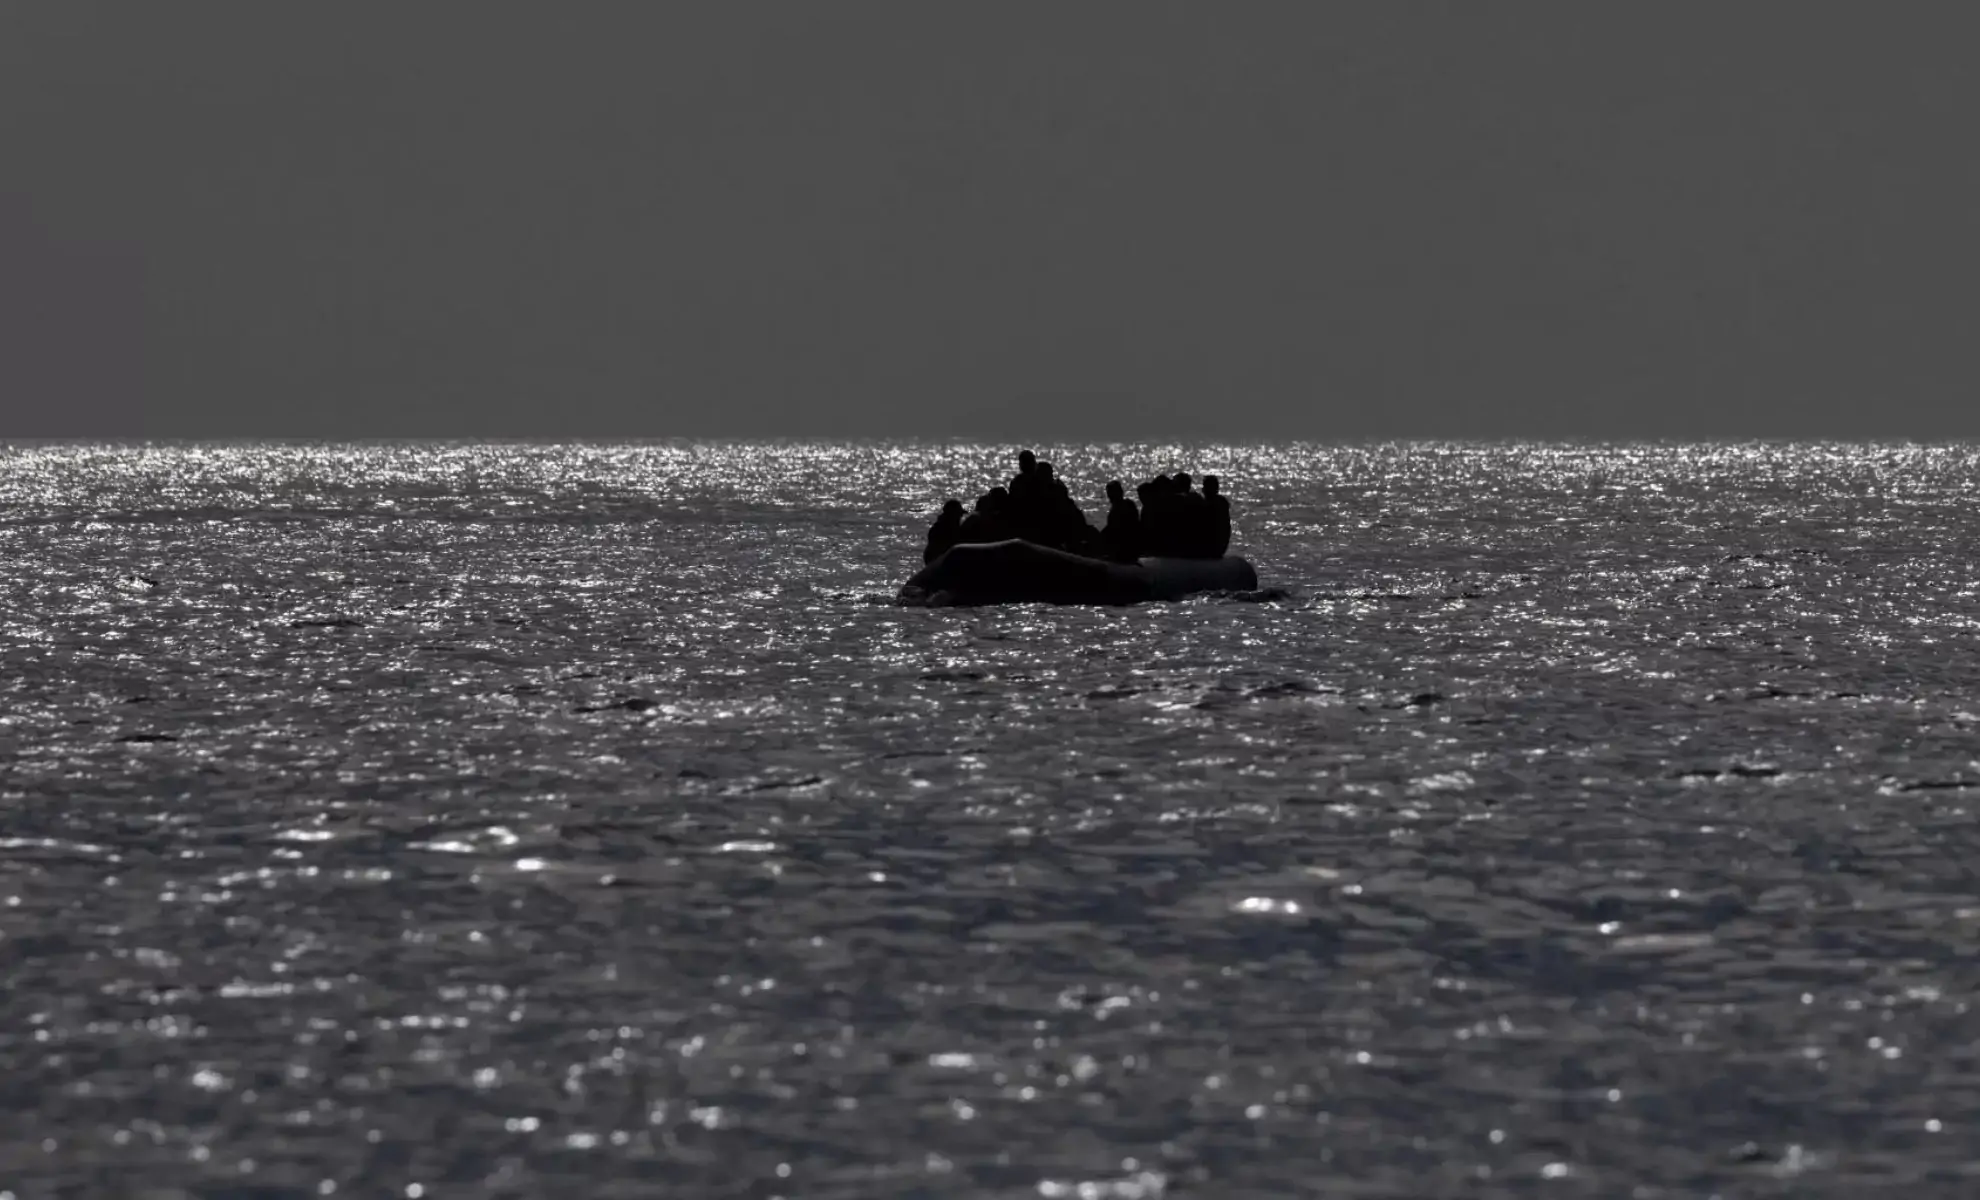 Trafic de migrants - immigration clandestine -Méditerranée